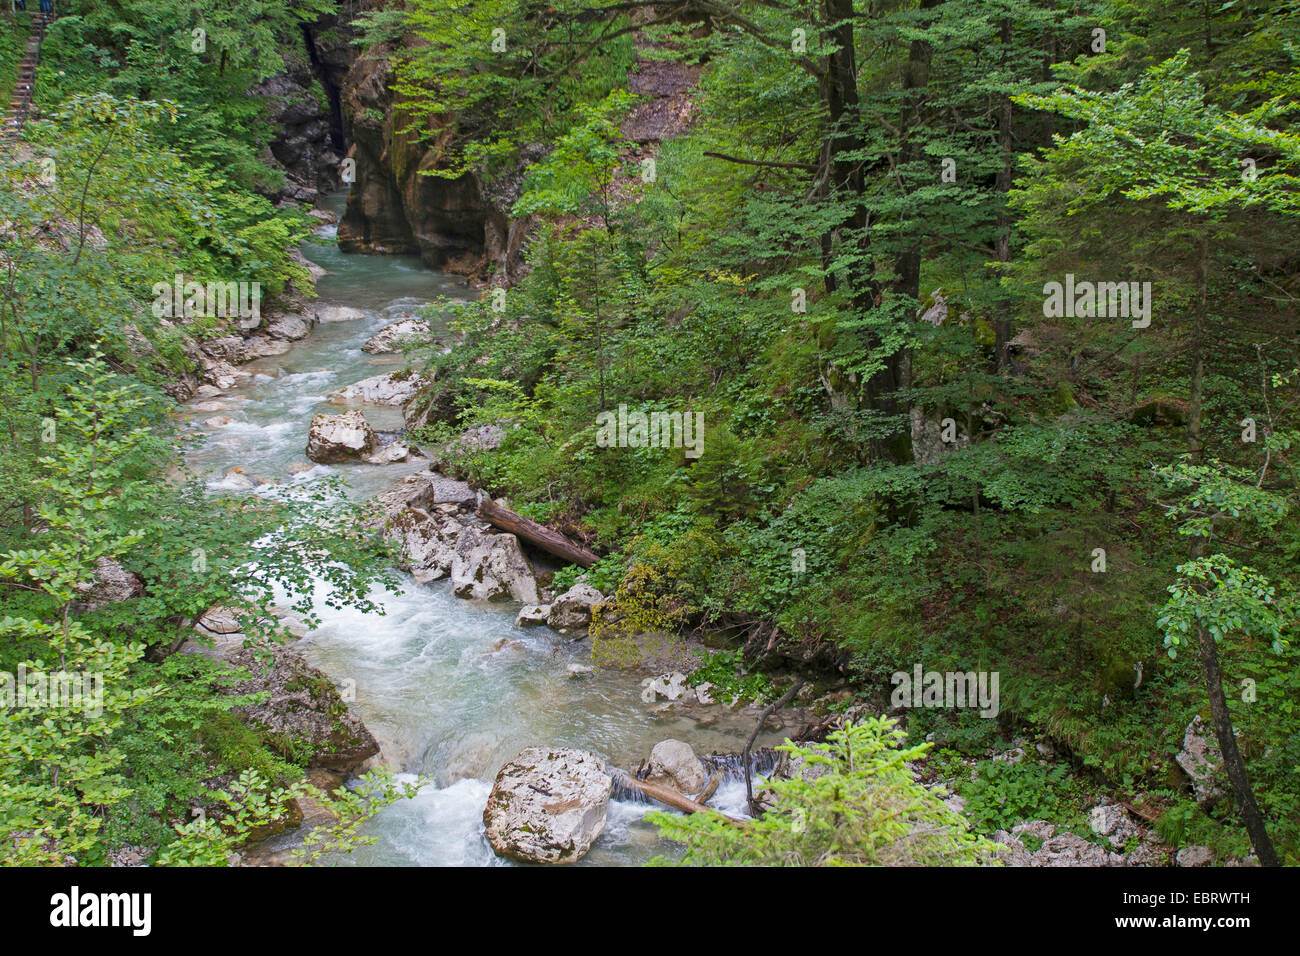 Tscheppaschlucht gorge with Loiblbach creek, Austria, Kaernten Stock Photo